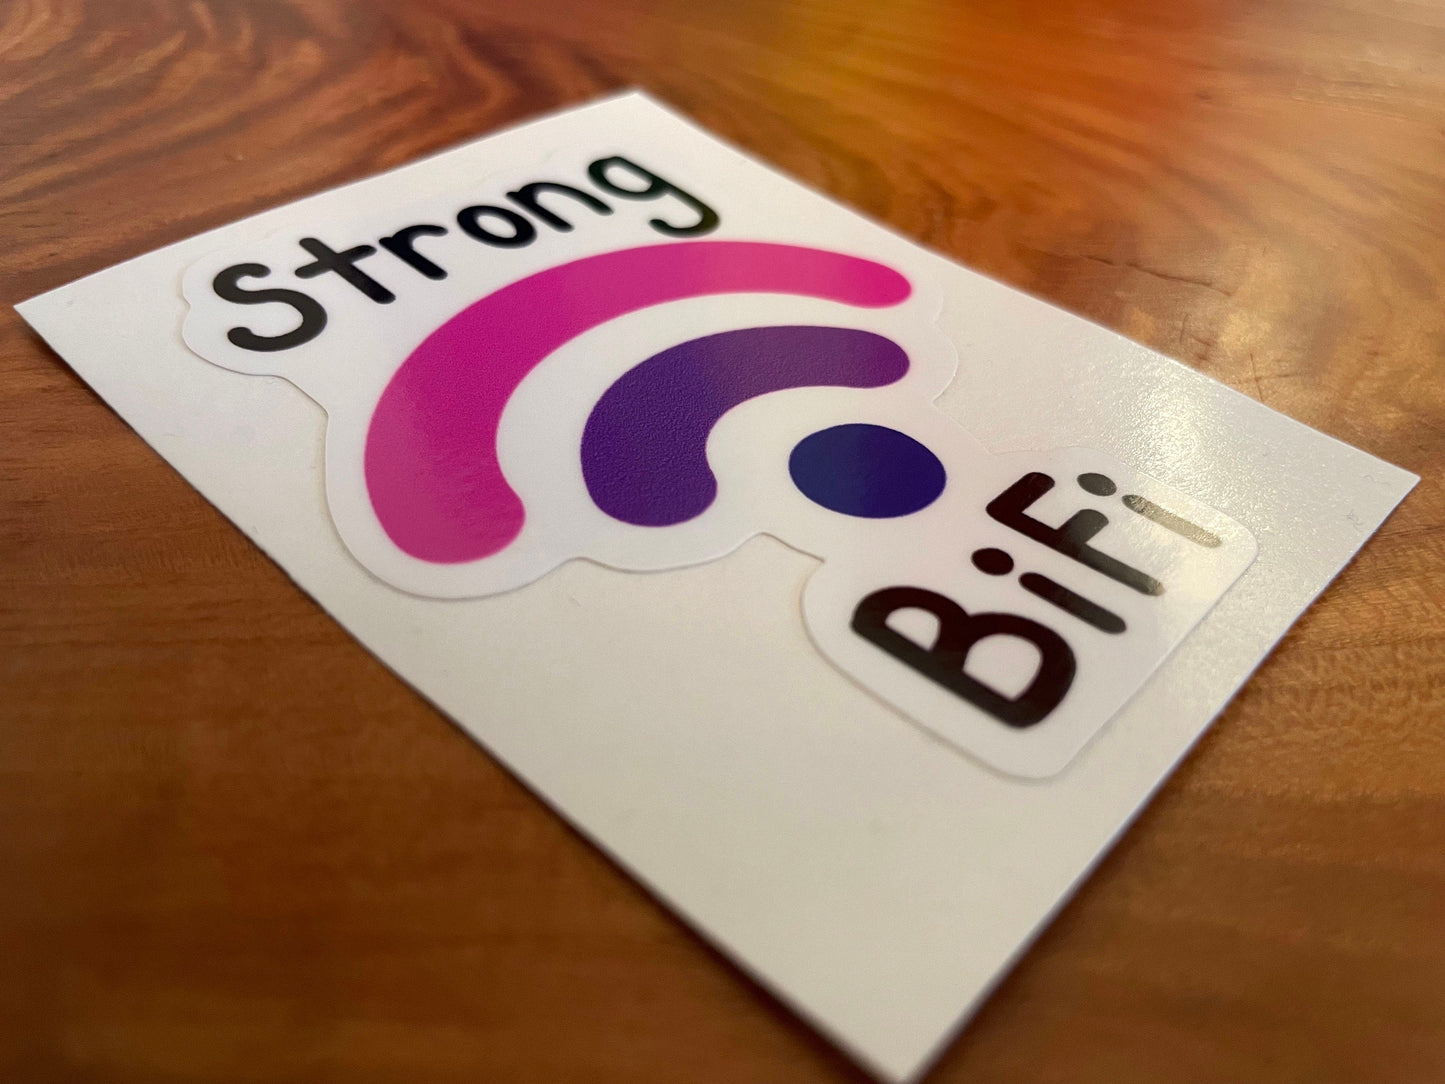 Bisexual Pride Sticker/ Strong BiFi Weatherproof Die-Cut Sticker/ BiFi Die-Cut Sticker/ Bisexual Pride Flag Sticker/ BiFi Sticker